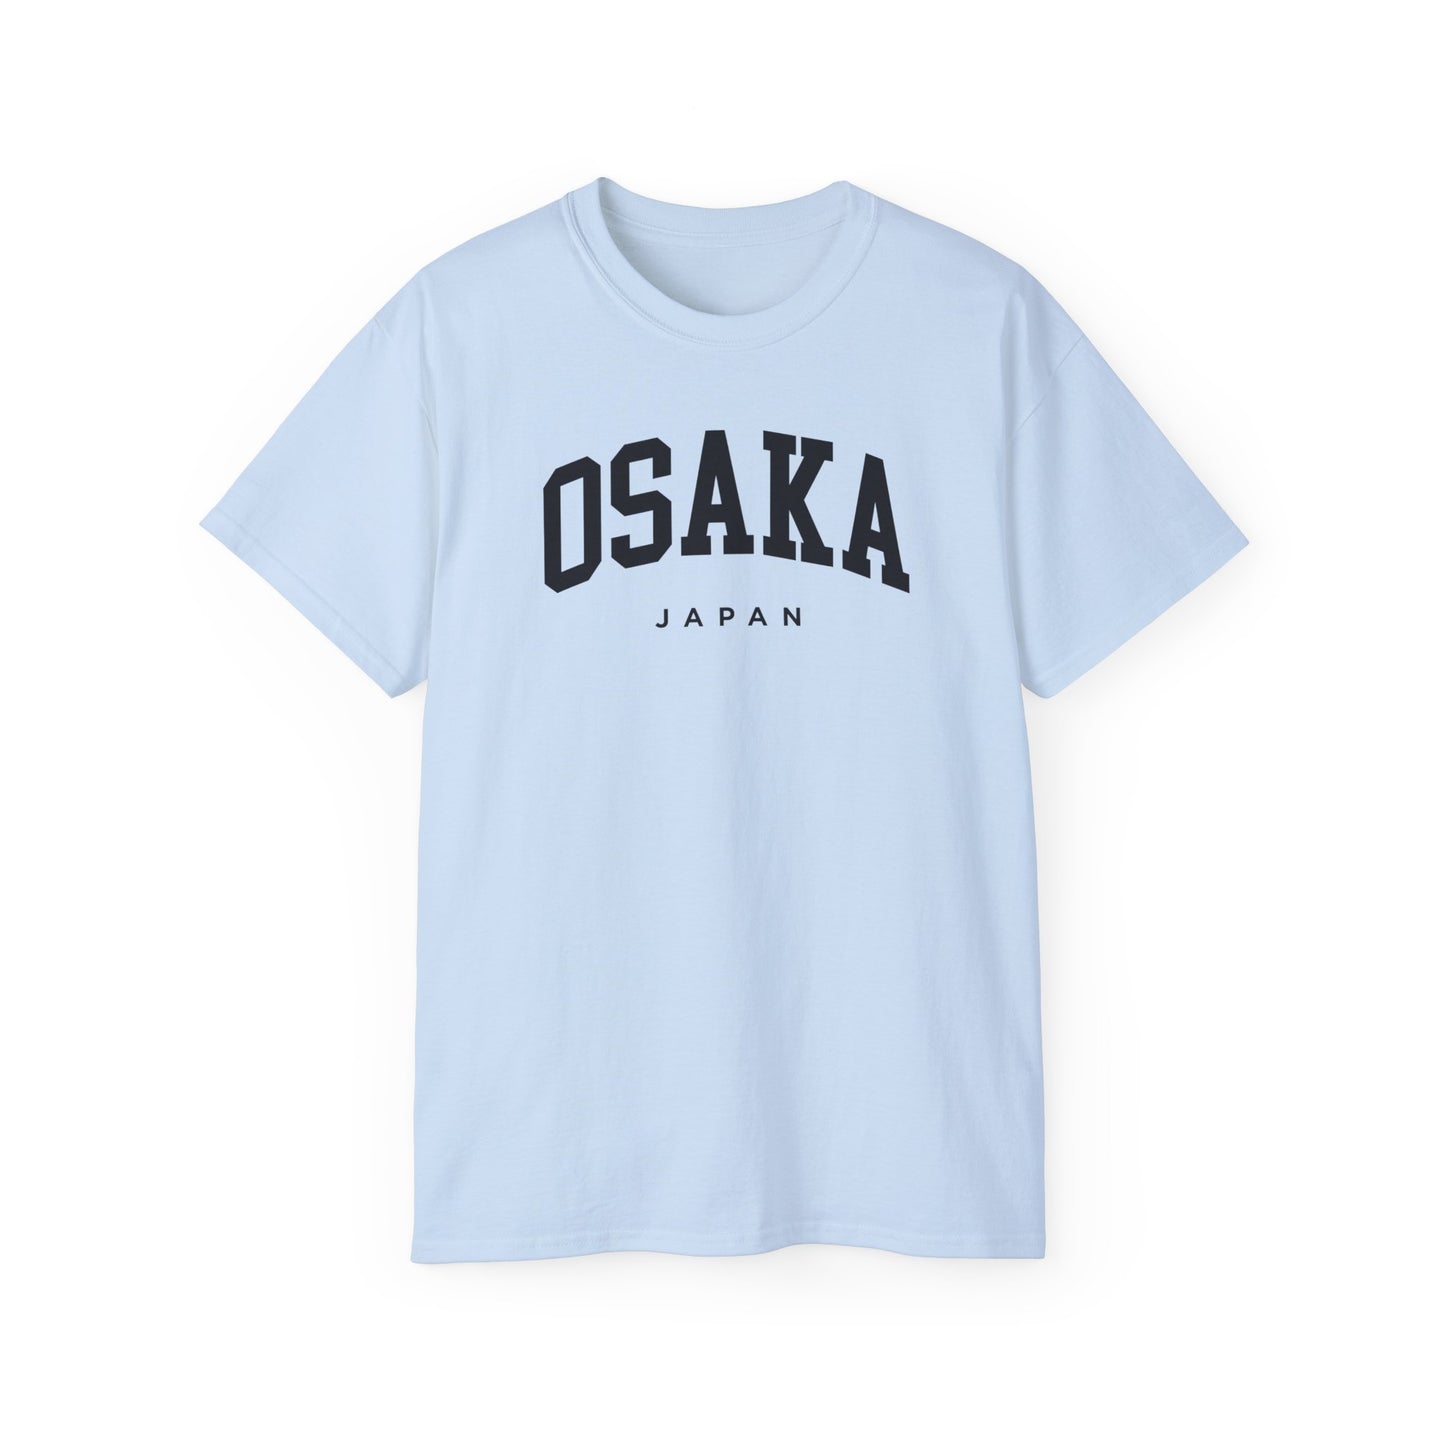 Osaka Japan Tee